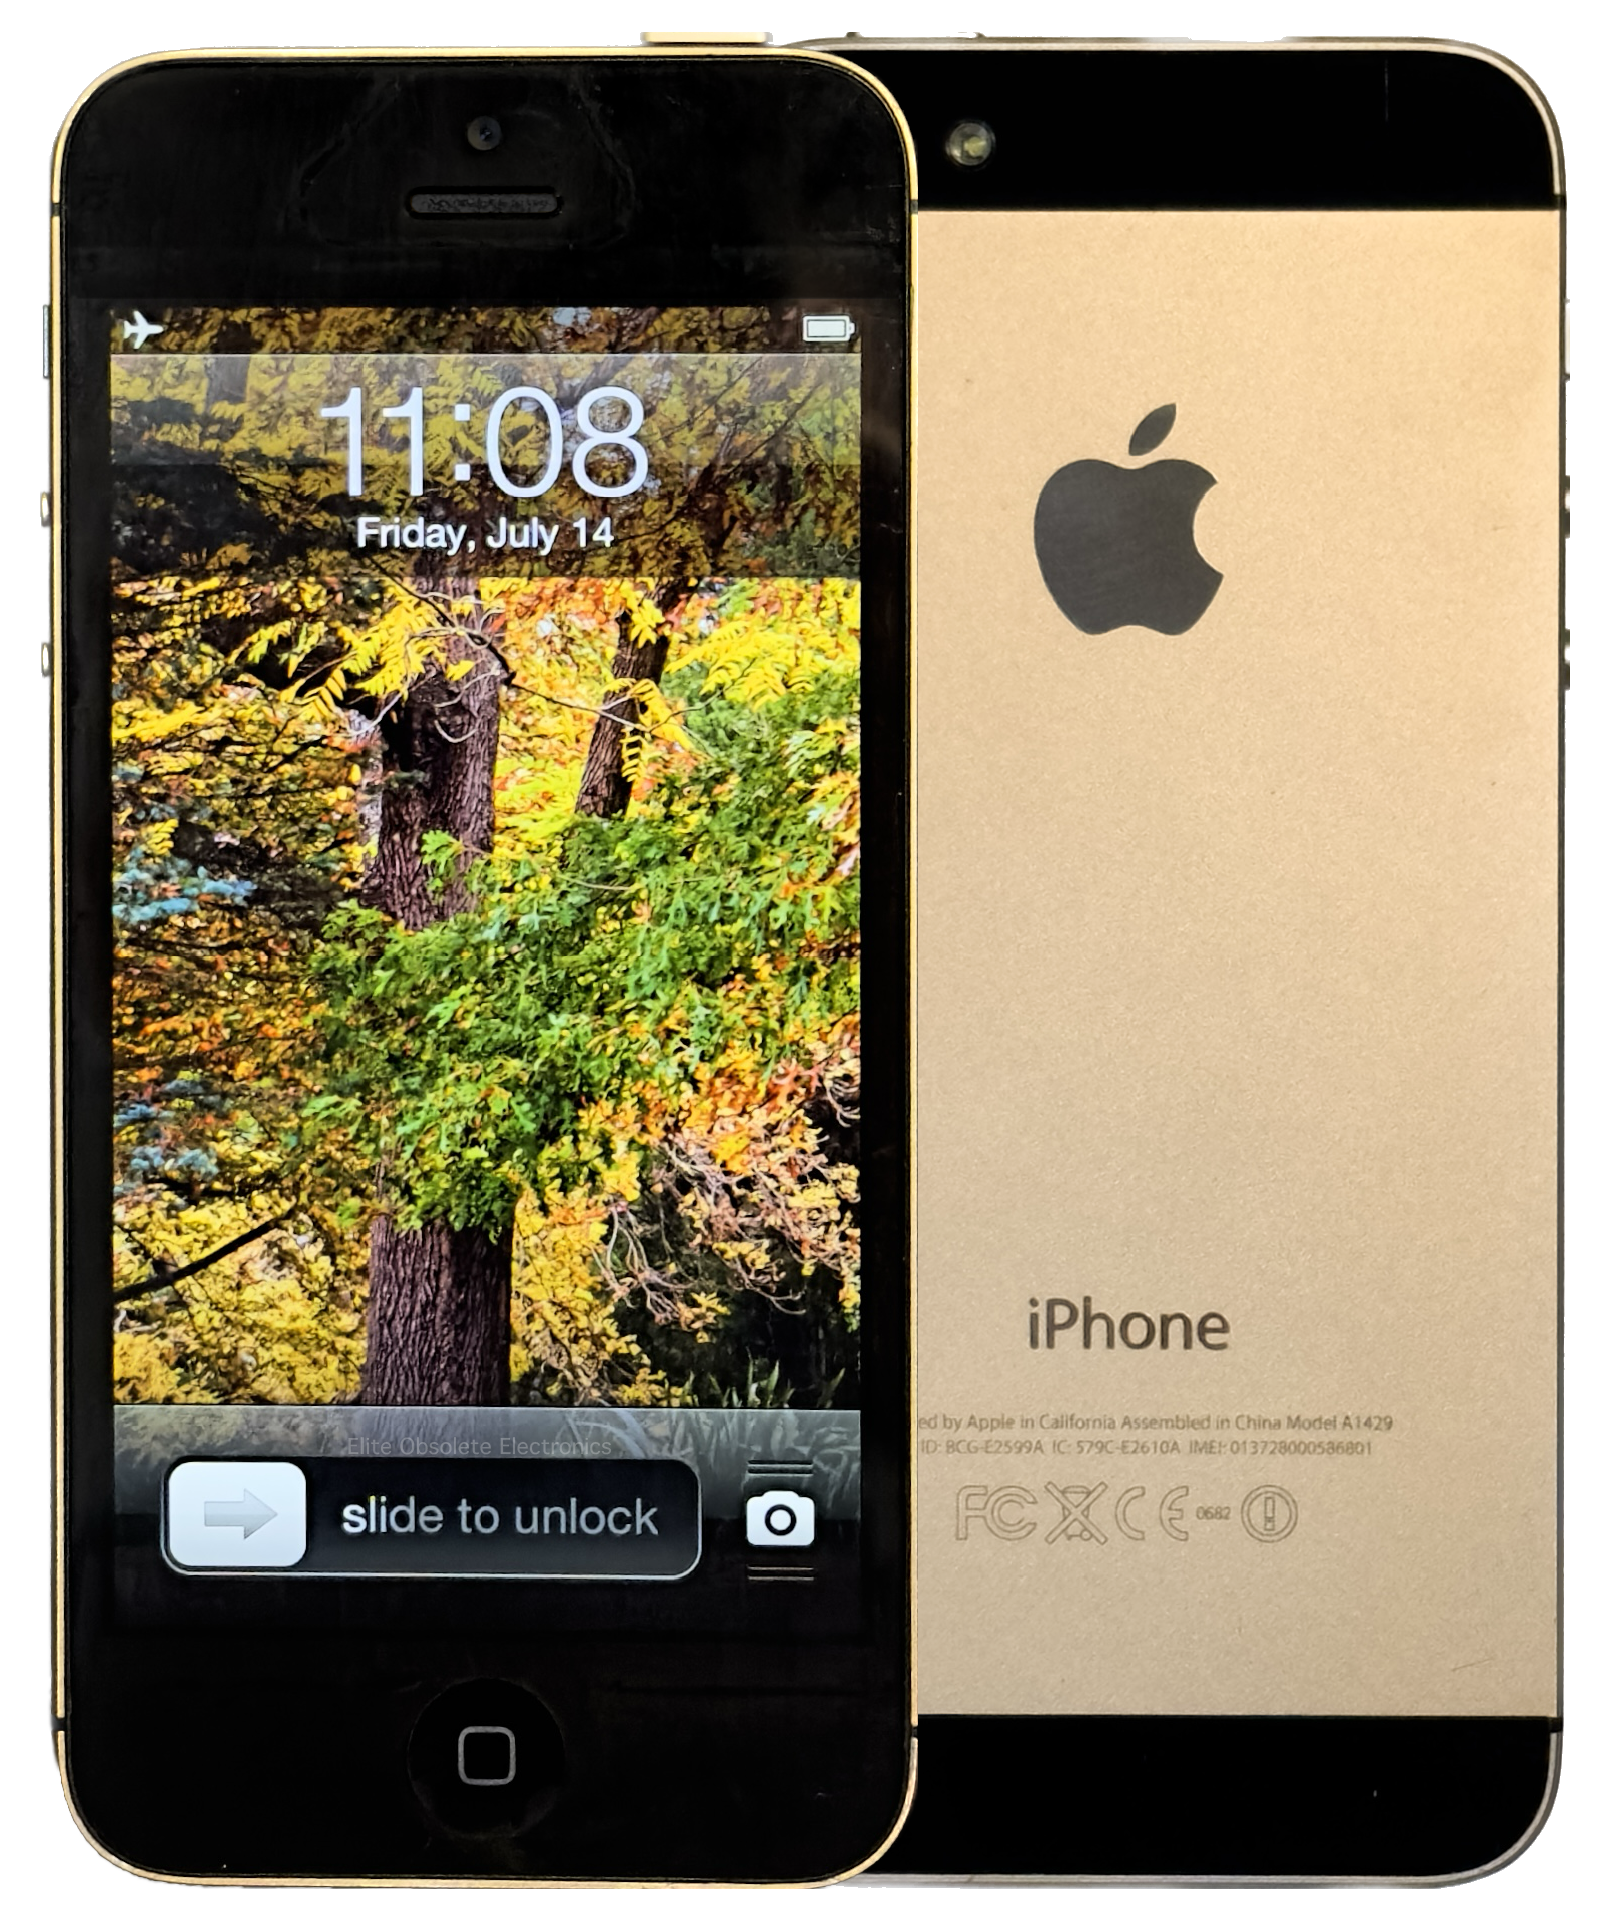 Refurbished Apple iPhone 5 16GB Gold & Black Custom Rare iOS 6.1.4 New Battery